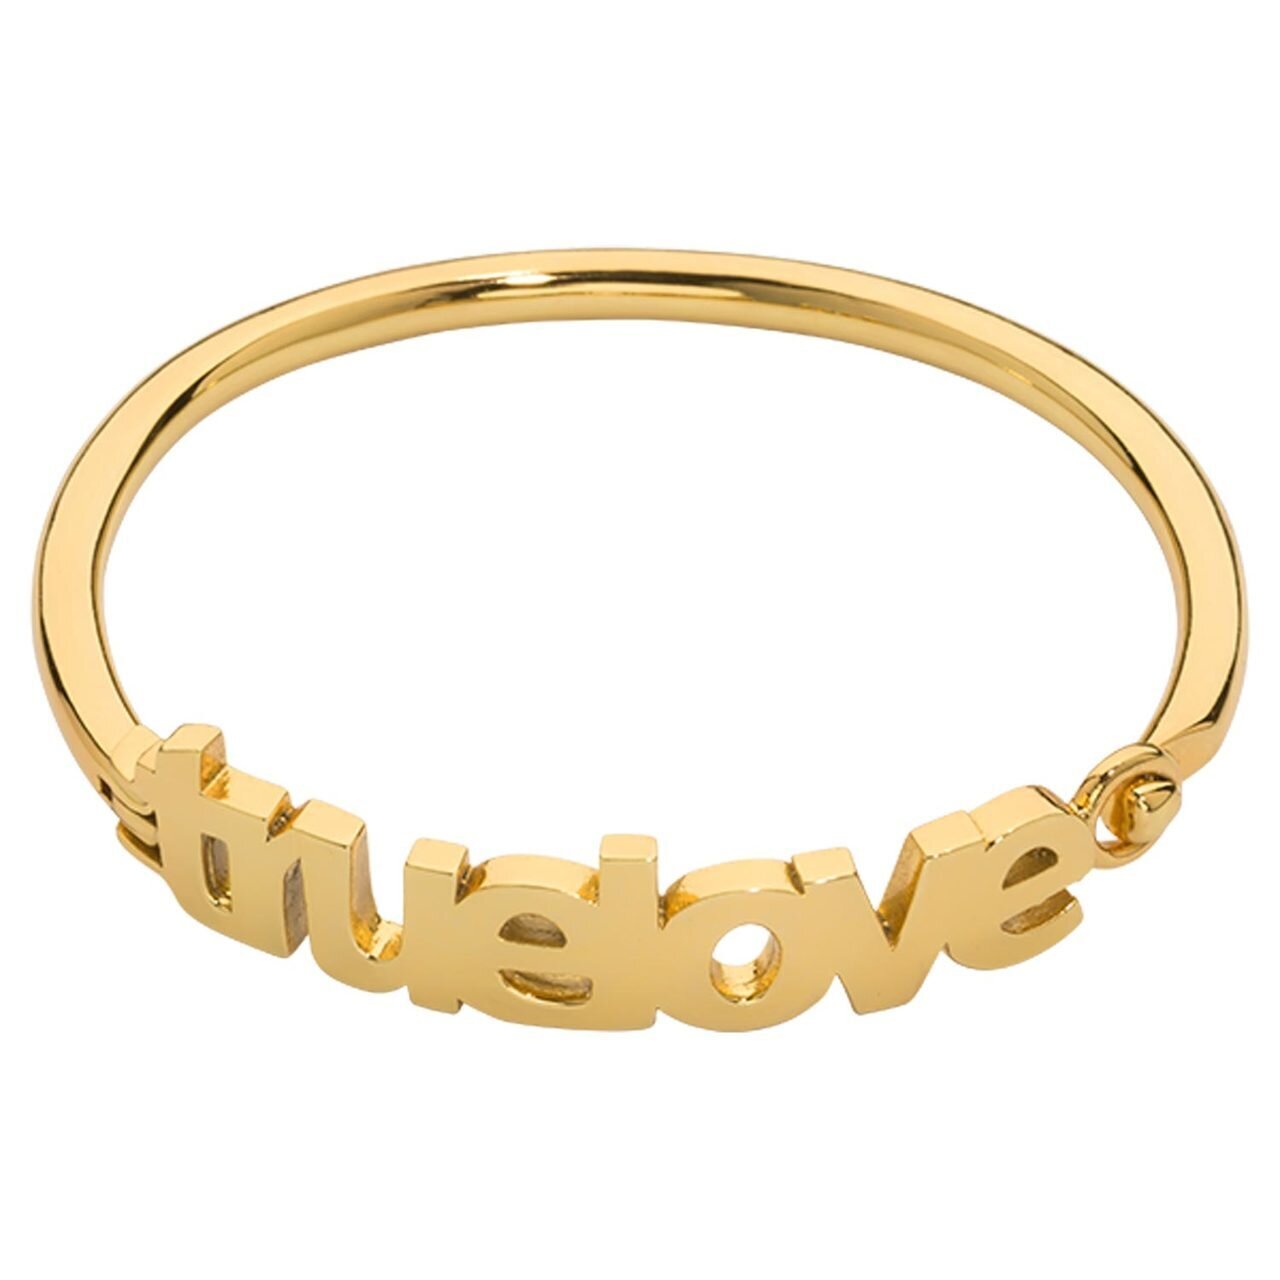 Nikki Lissoni Bracelet with True Love Tag Gold-plated 21cm B1134G21